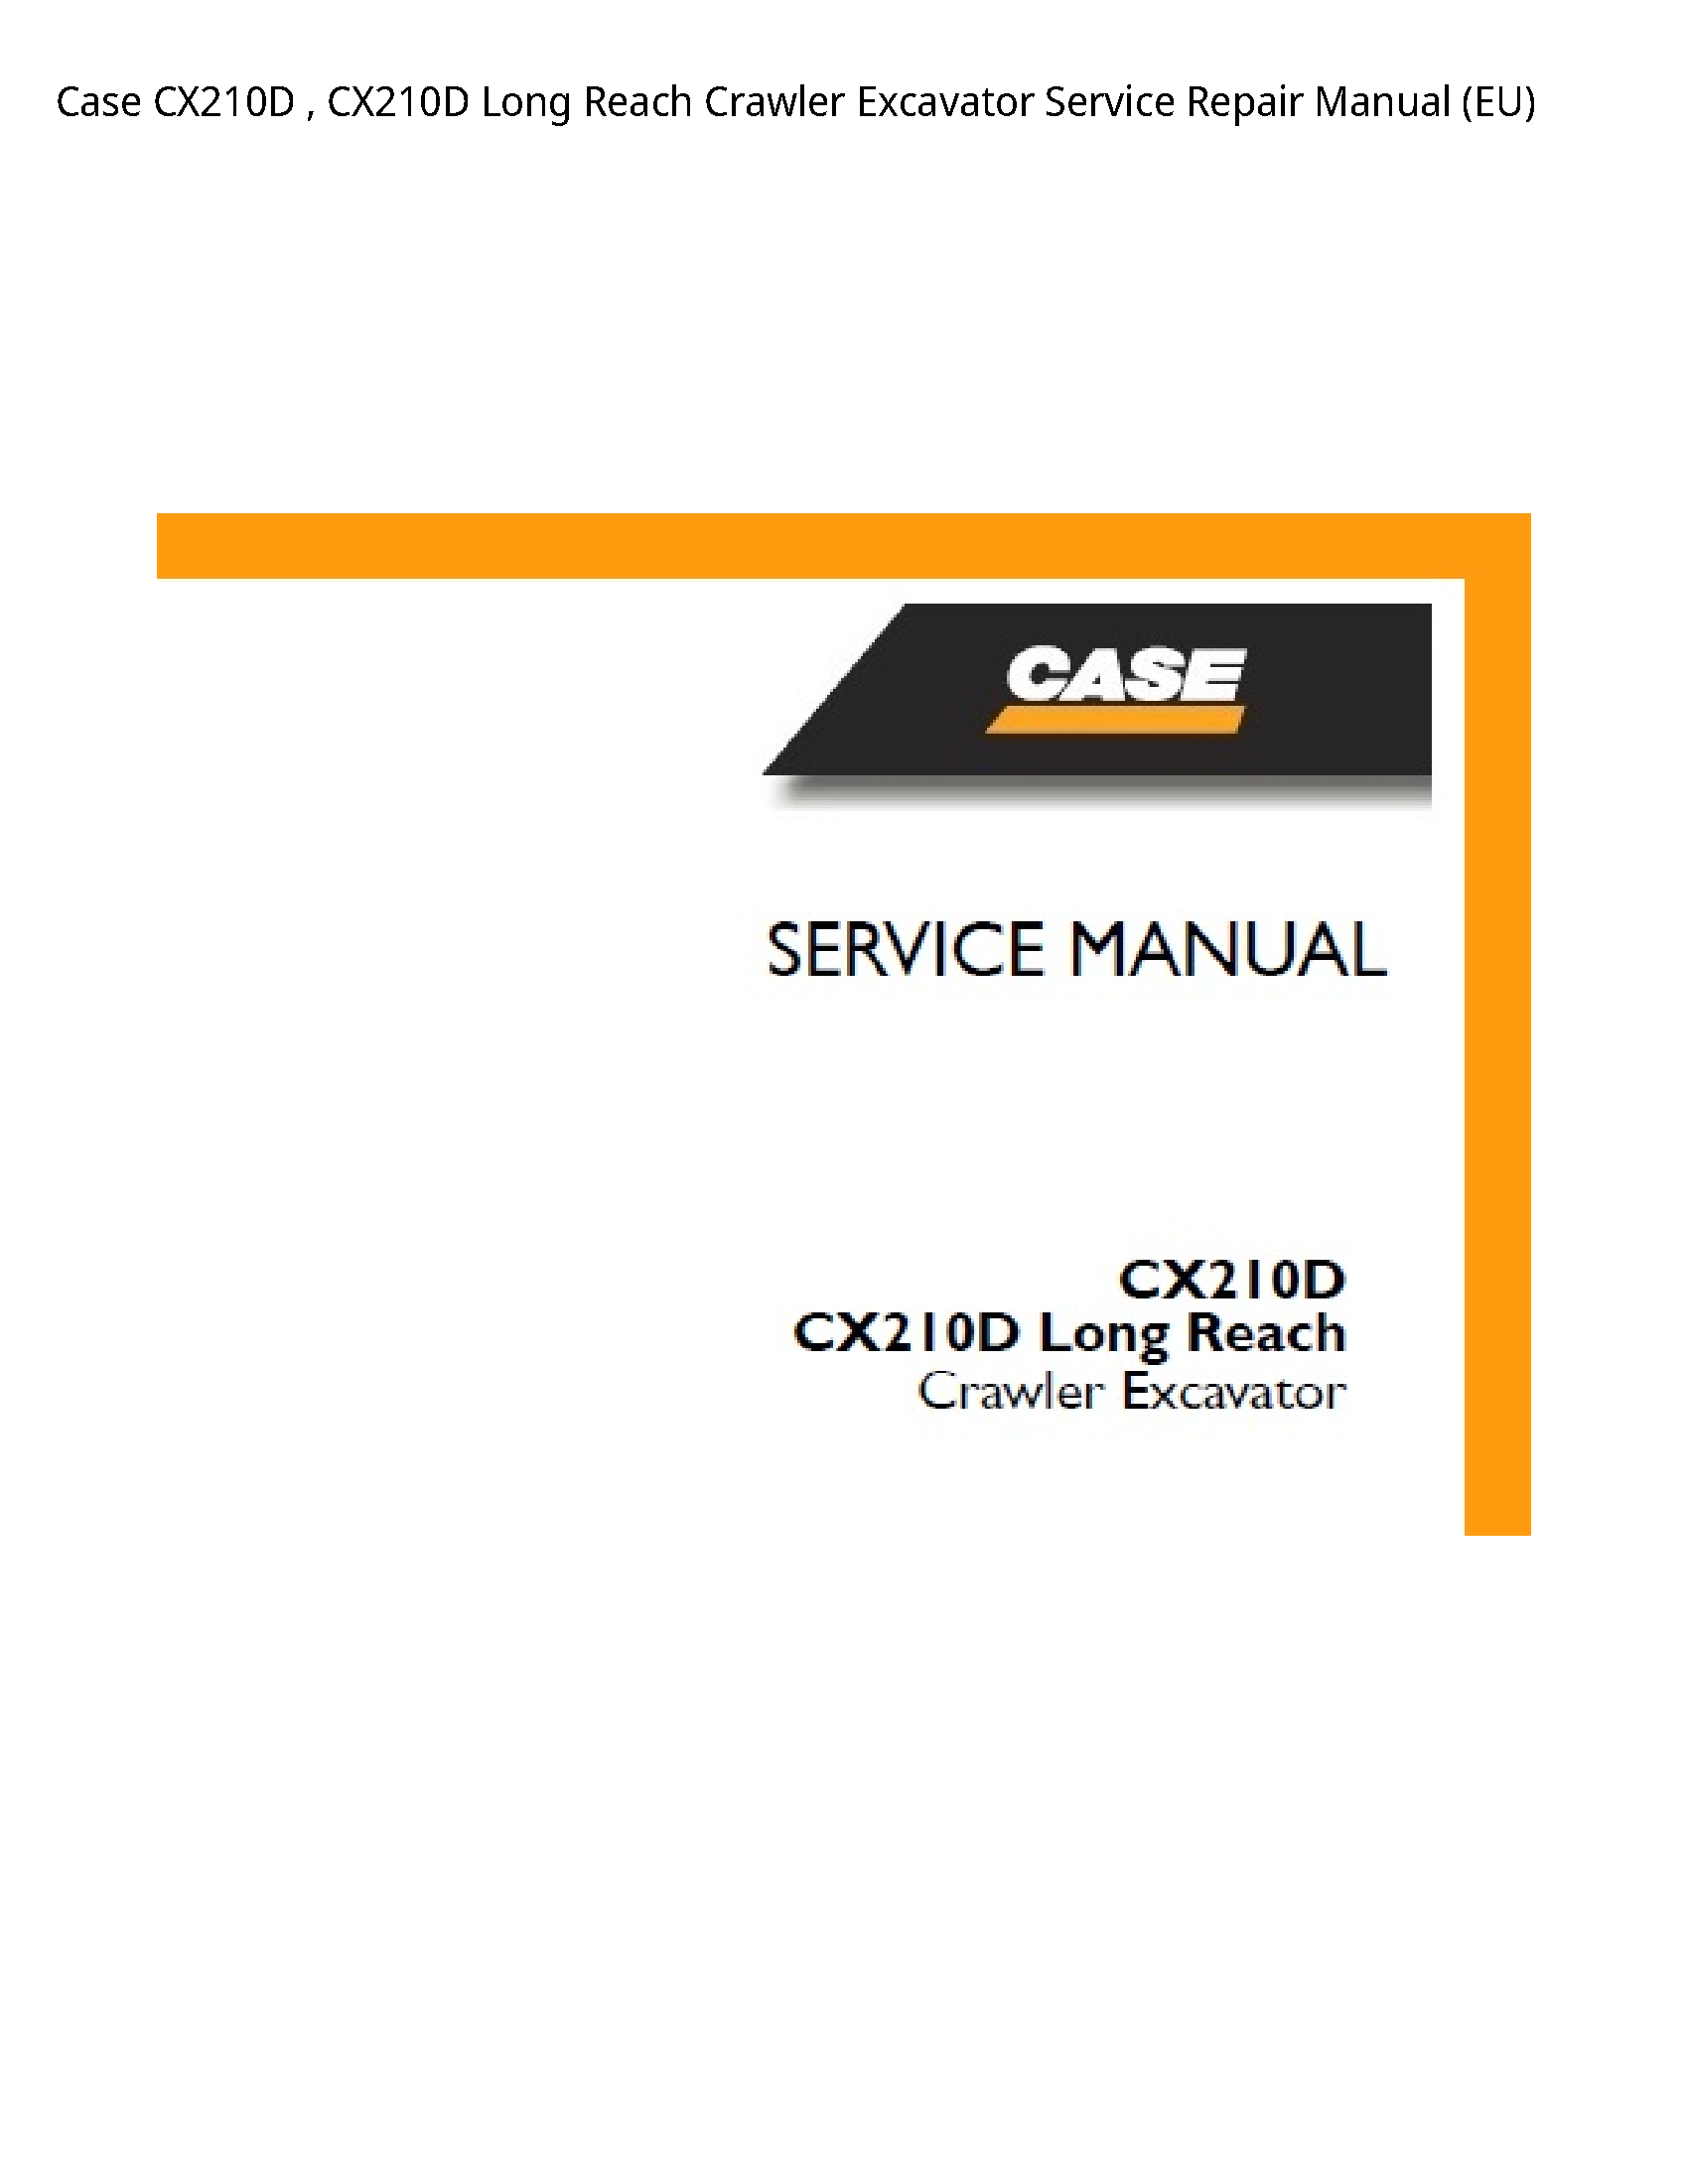 Case/Case IH CX210D Long Reach Crawler Excavator manual